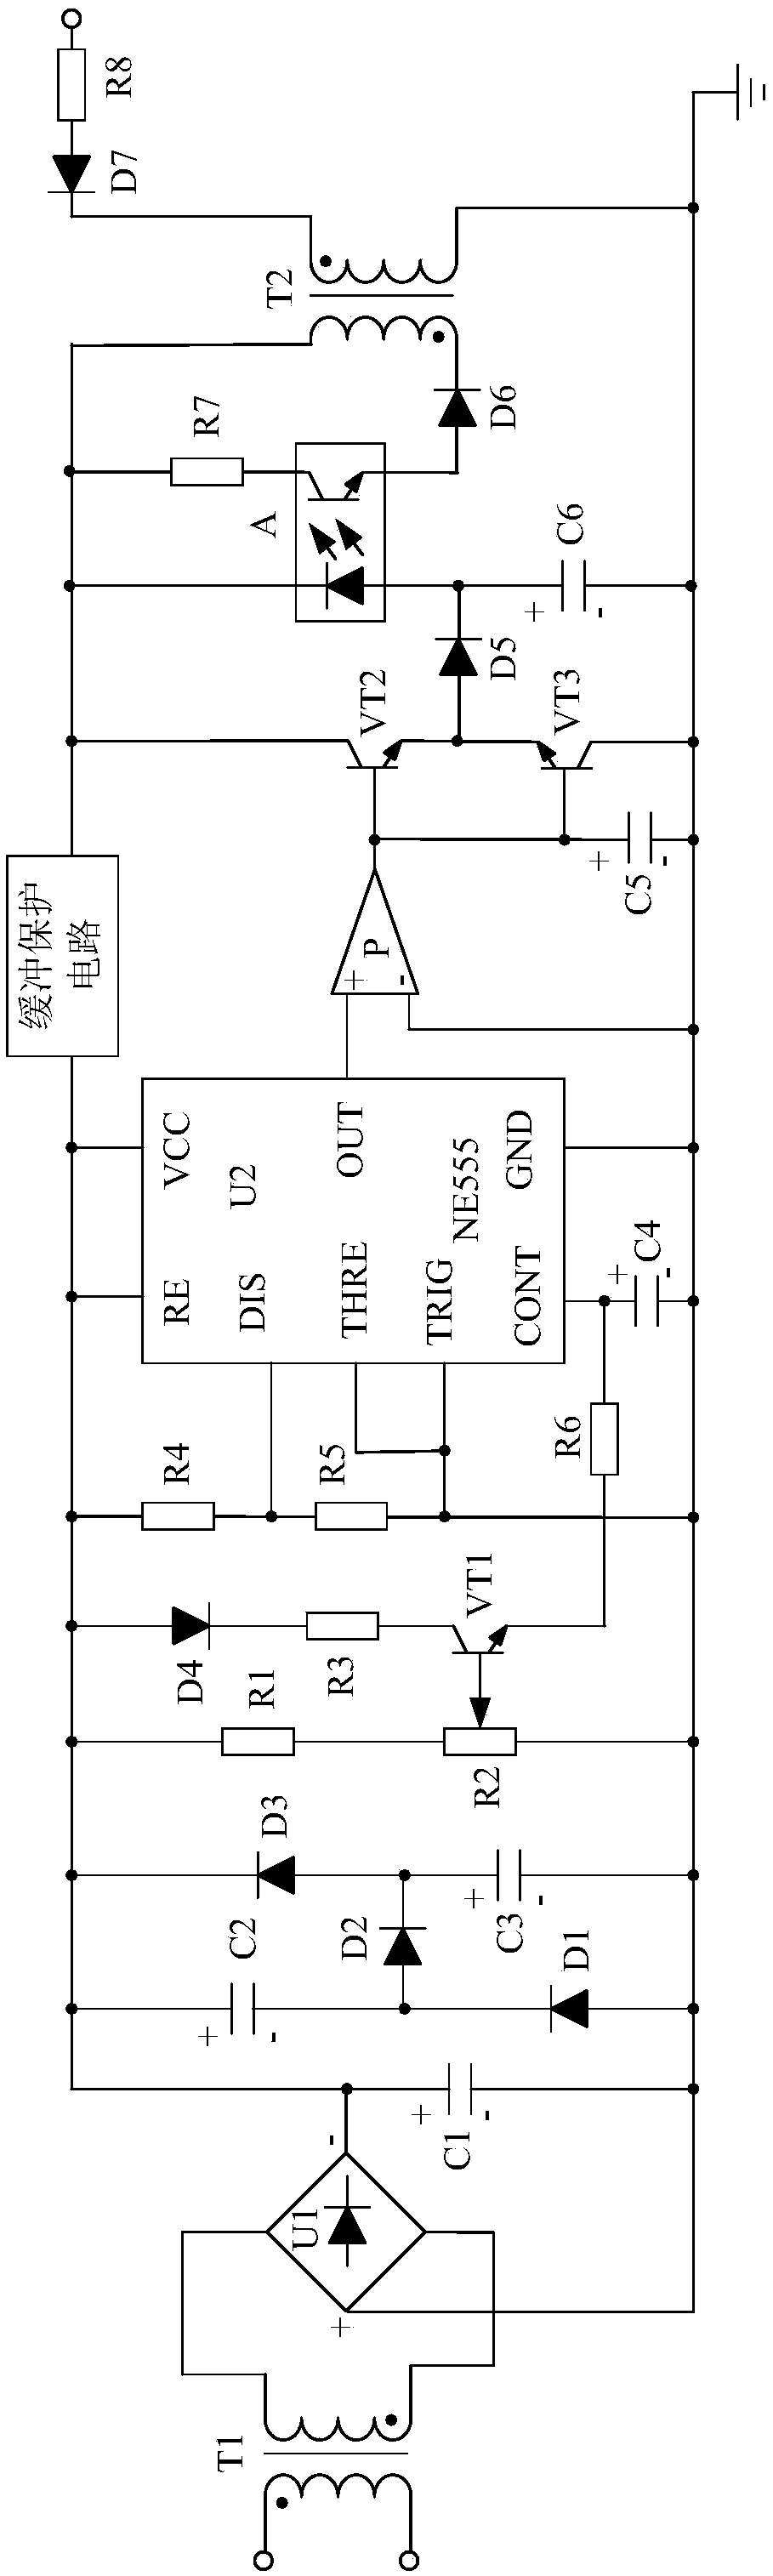 Voltage buffer power supply based on harmonic isolation